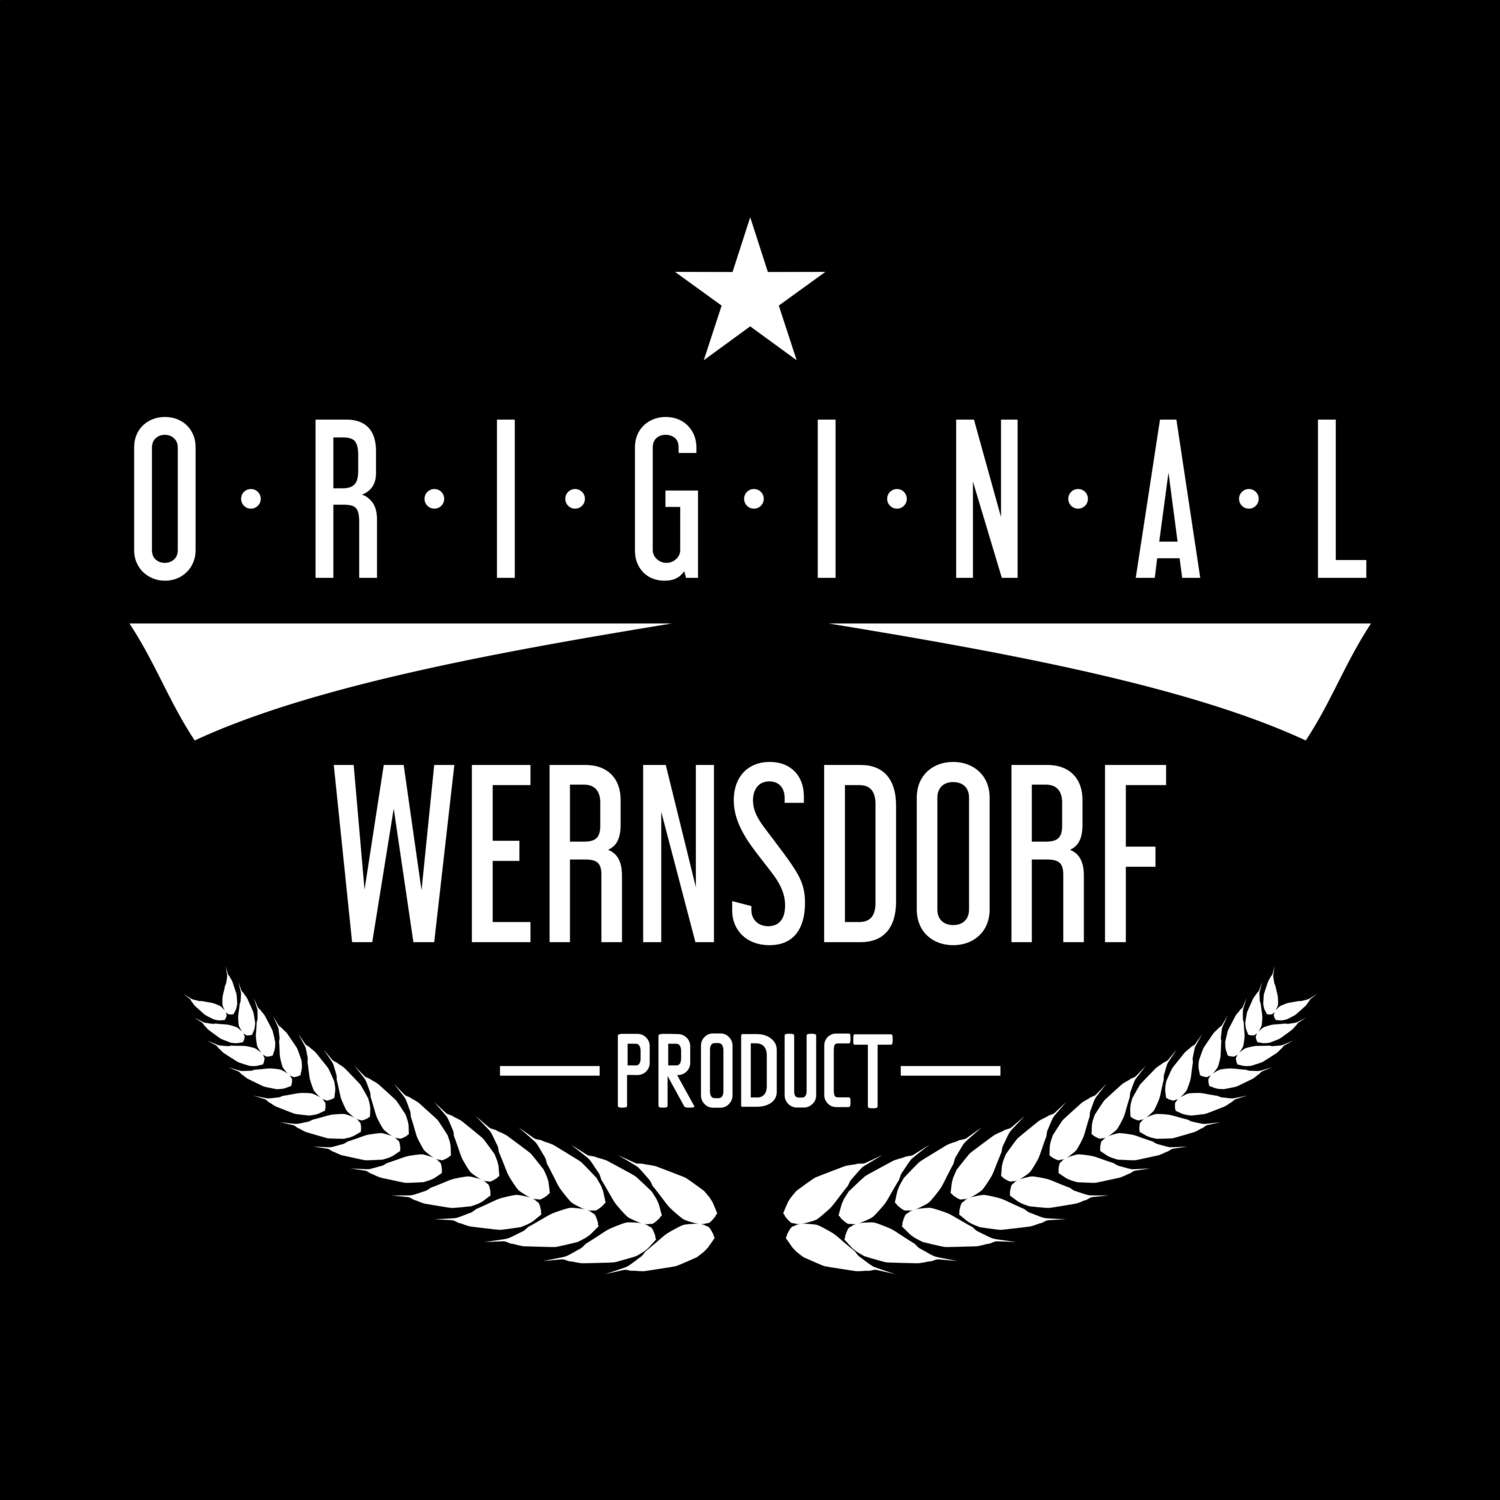 Wernsdorf T-Shirt »Original Product«